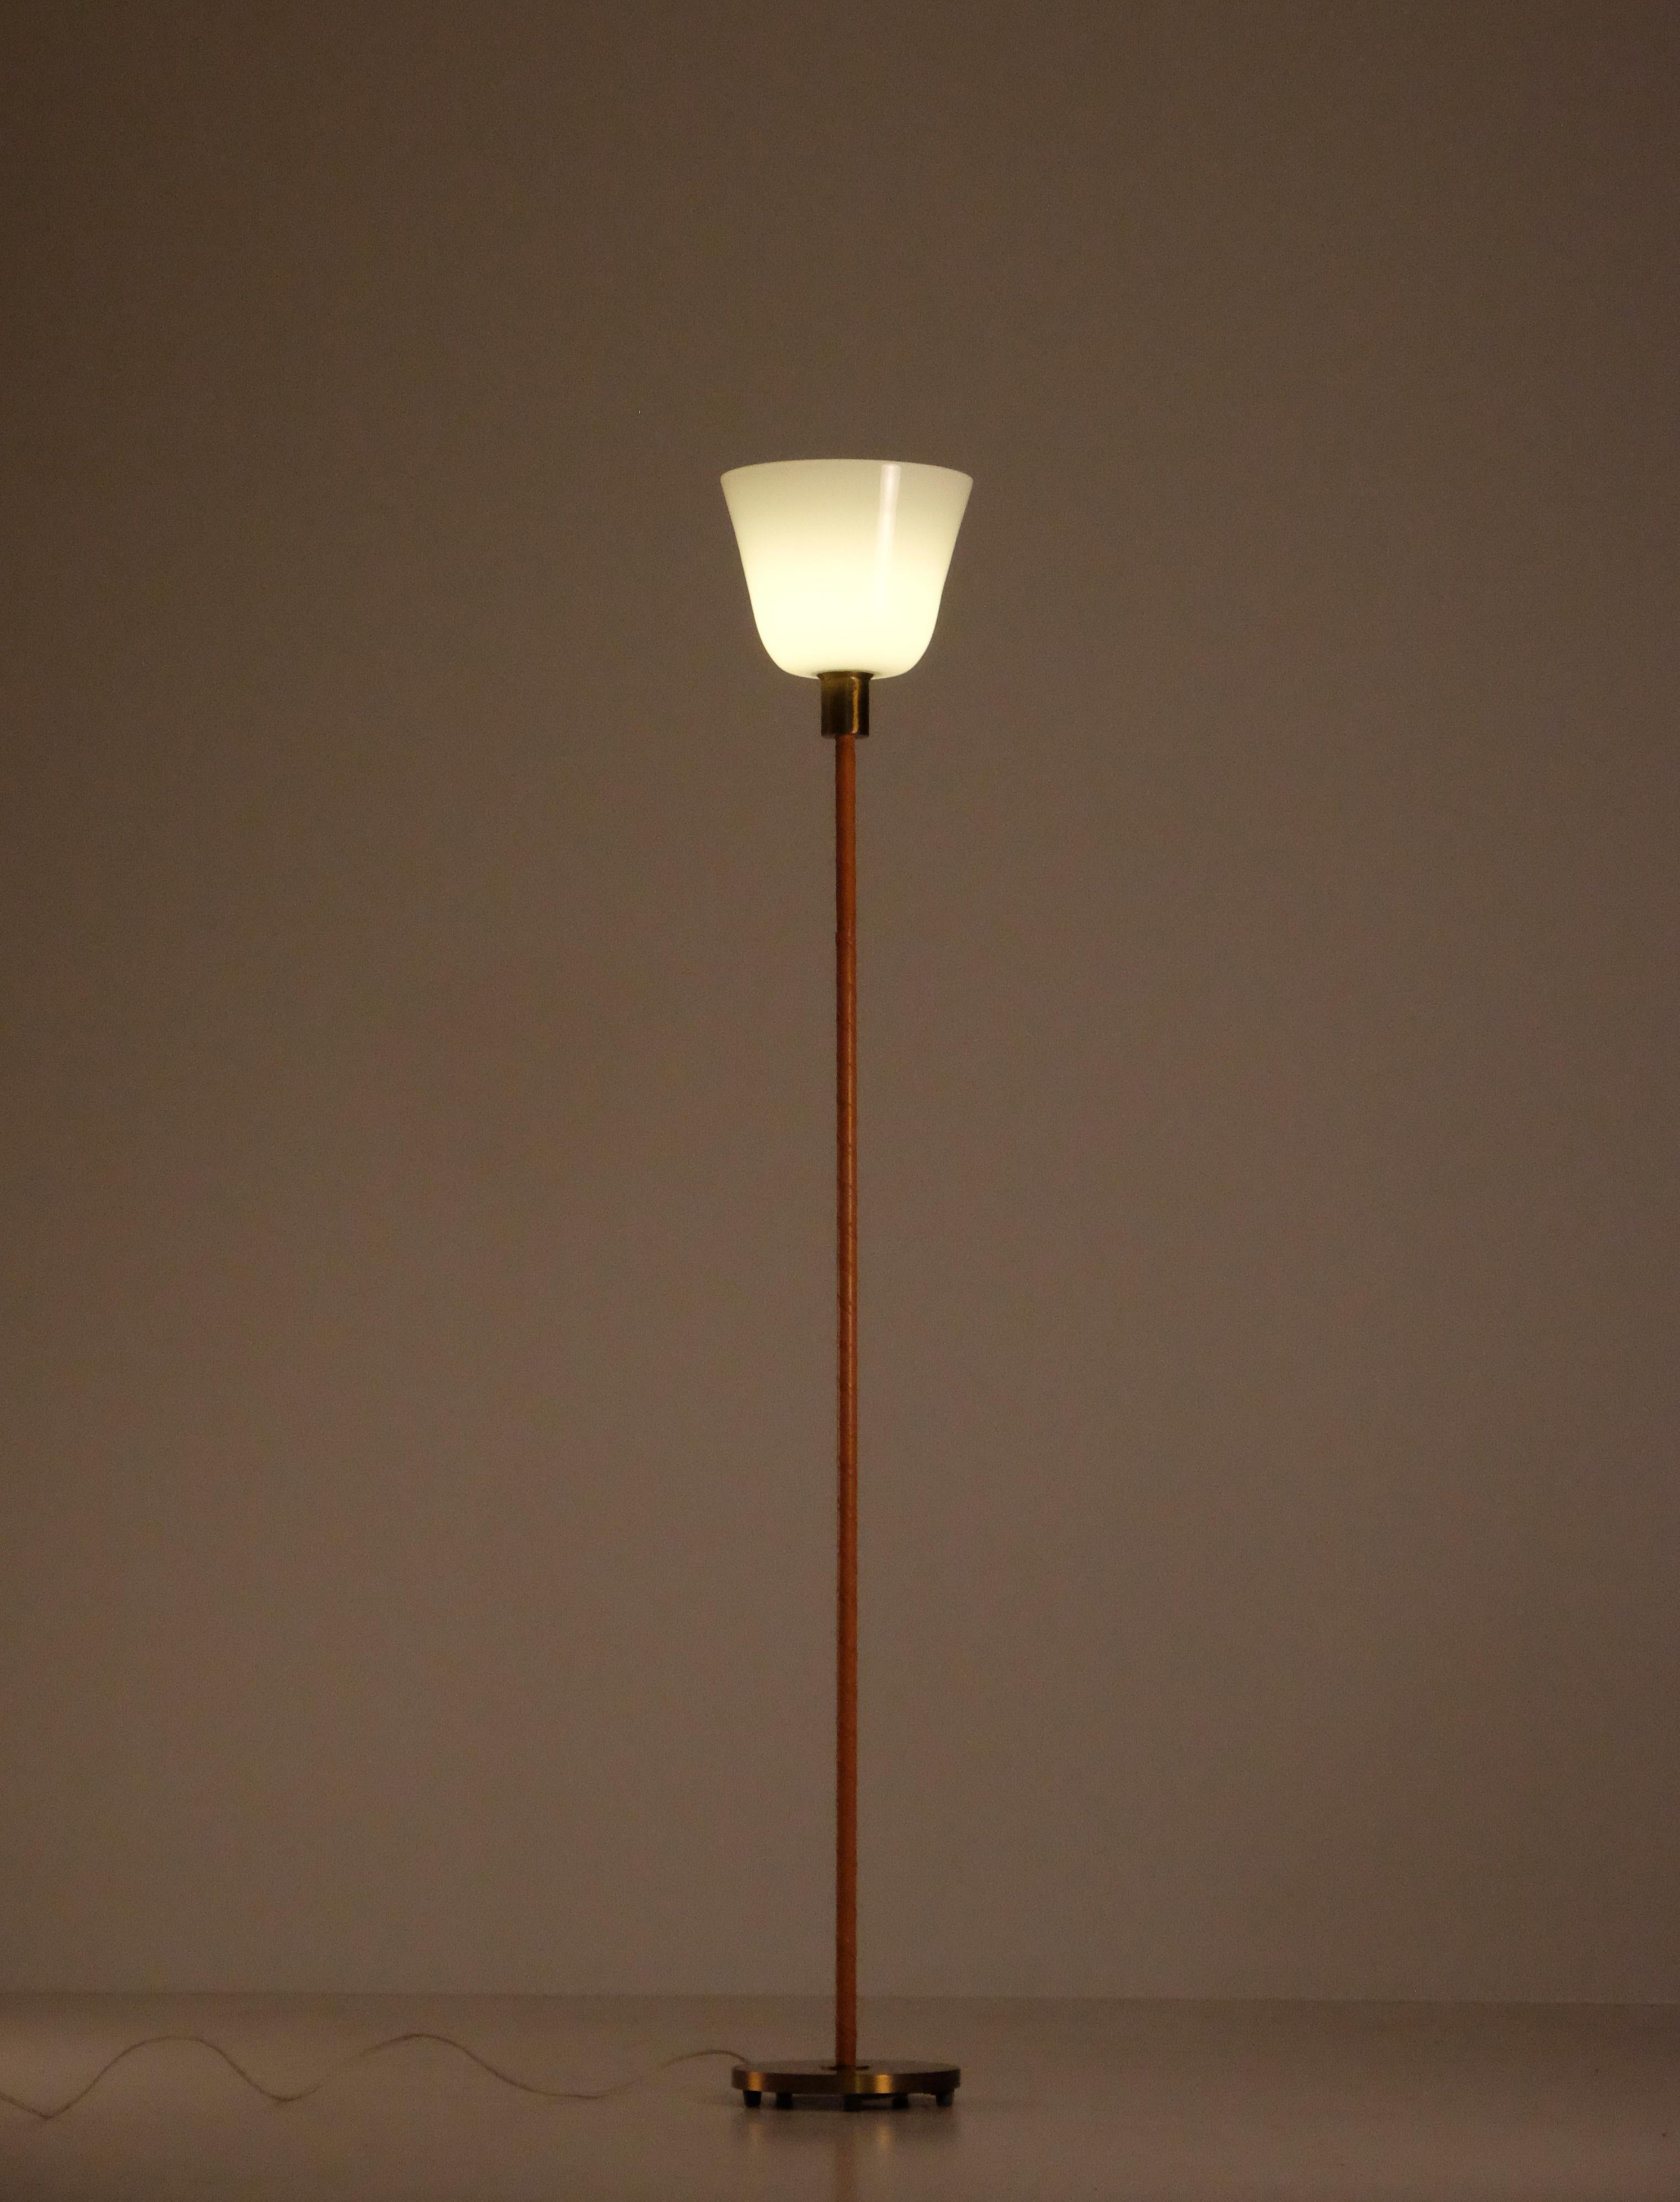 Brass, leather & glass uplight by Nordiska Kompaniet, 1950s.
Height: 153 cm
Model: 32786